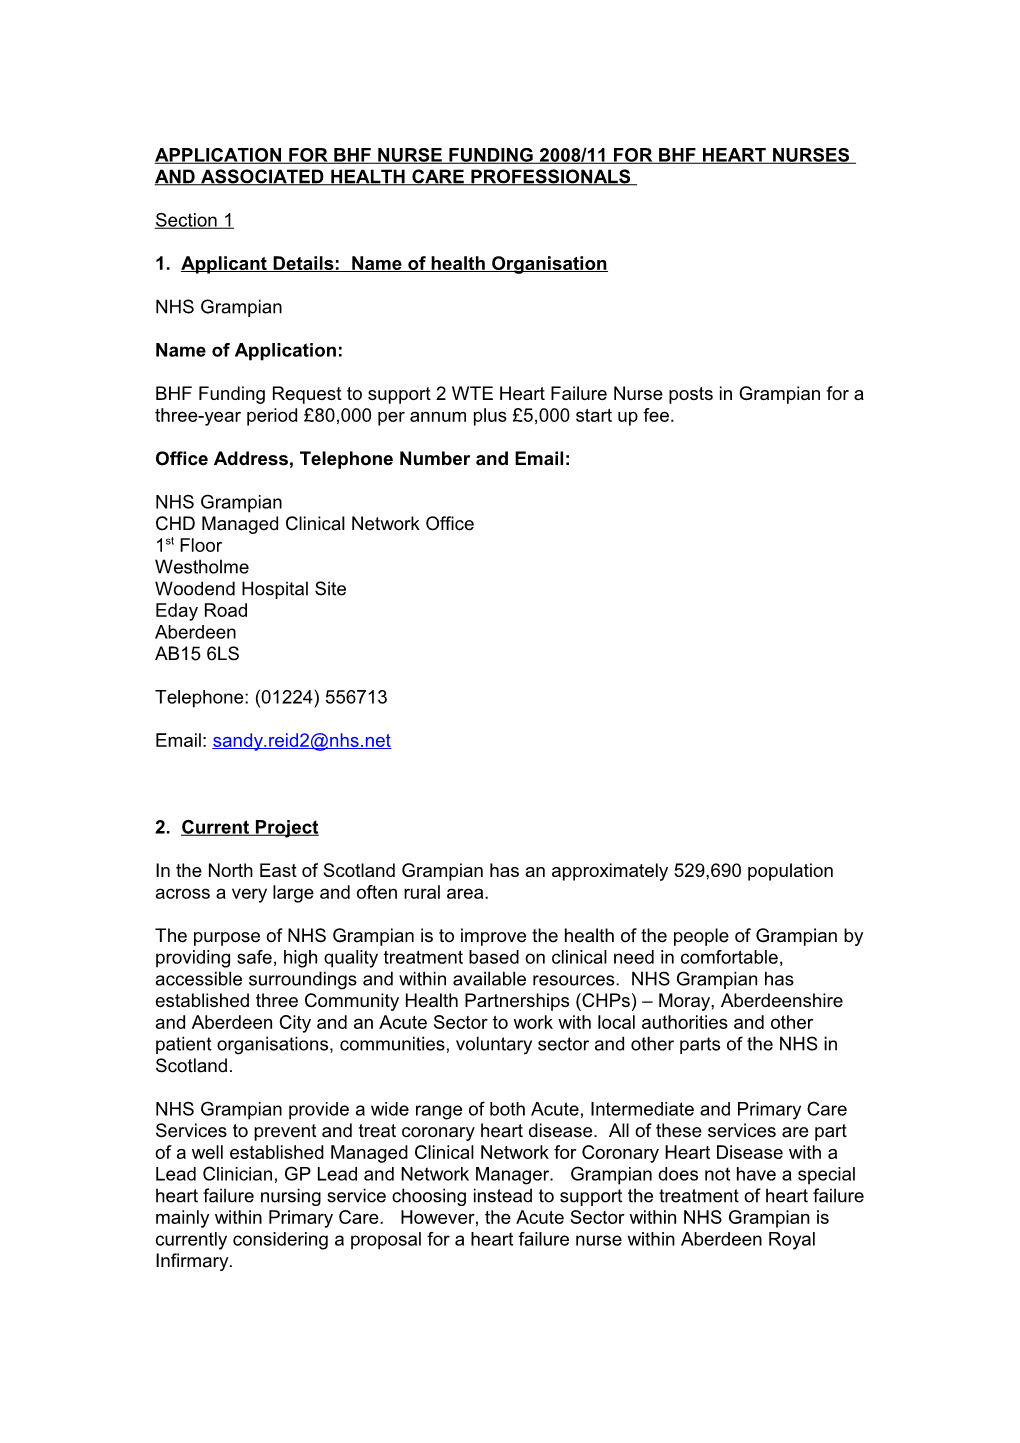 Application for Bhf Nurse Funding 2008/11 for Bhf Heart Nurses and Associated Health Care